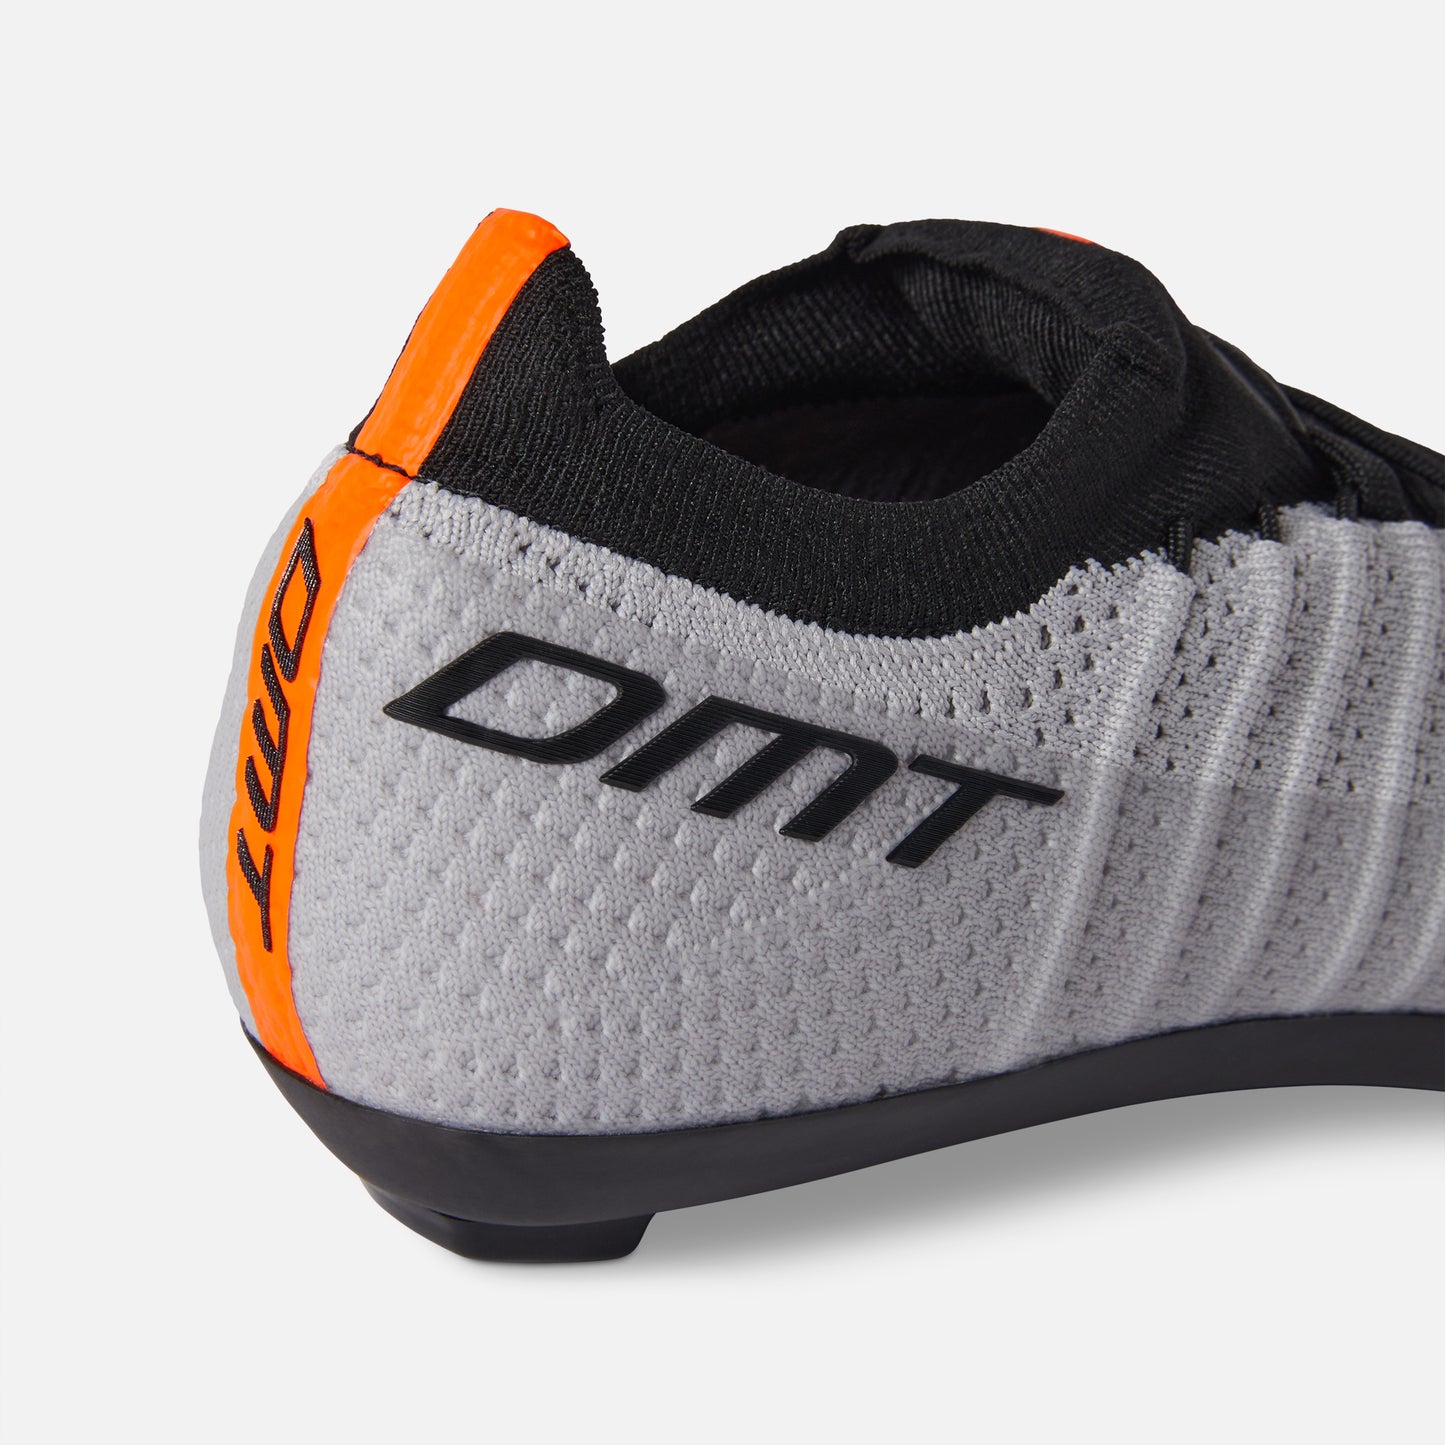 DMT Kr Sl bike shoes Grey/Black - DMT Cycling